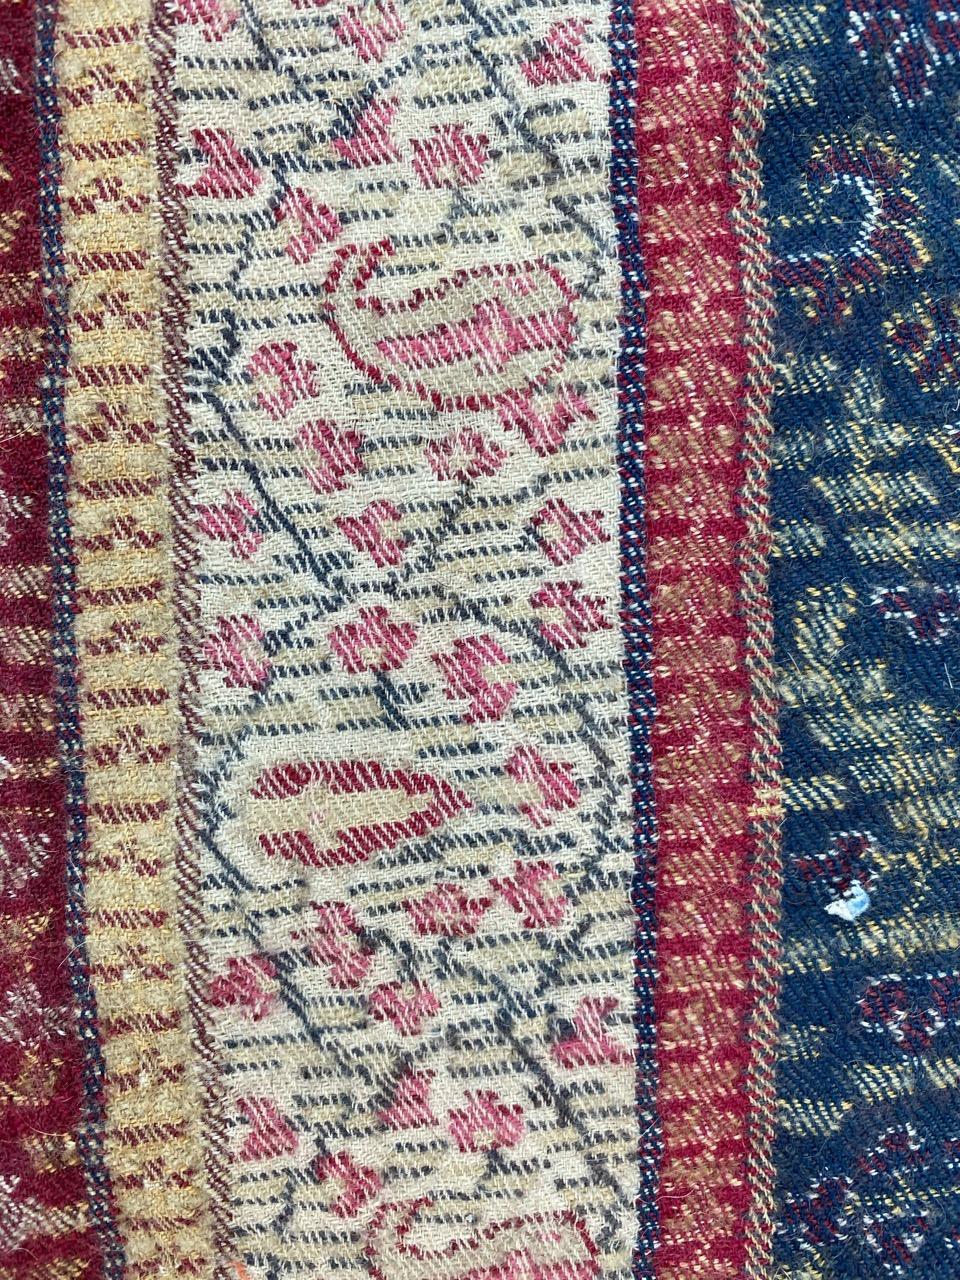 Wool Bobyrug’s Antique Distressed Indian Bayadir Shawl For Sale